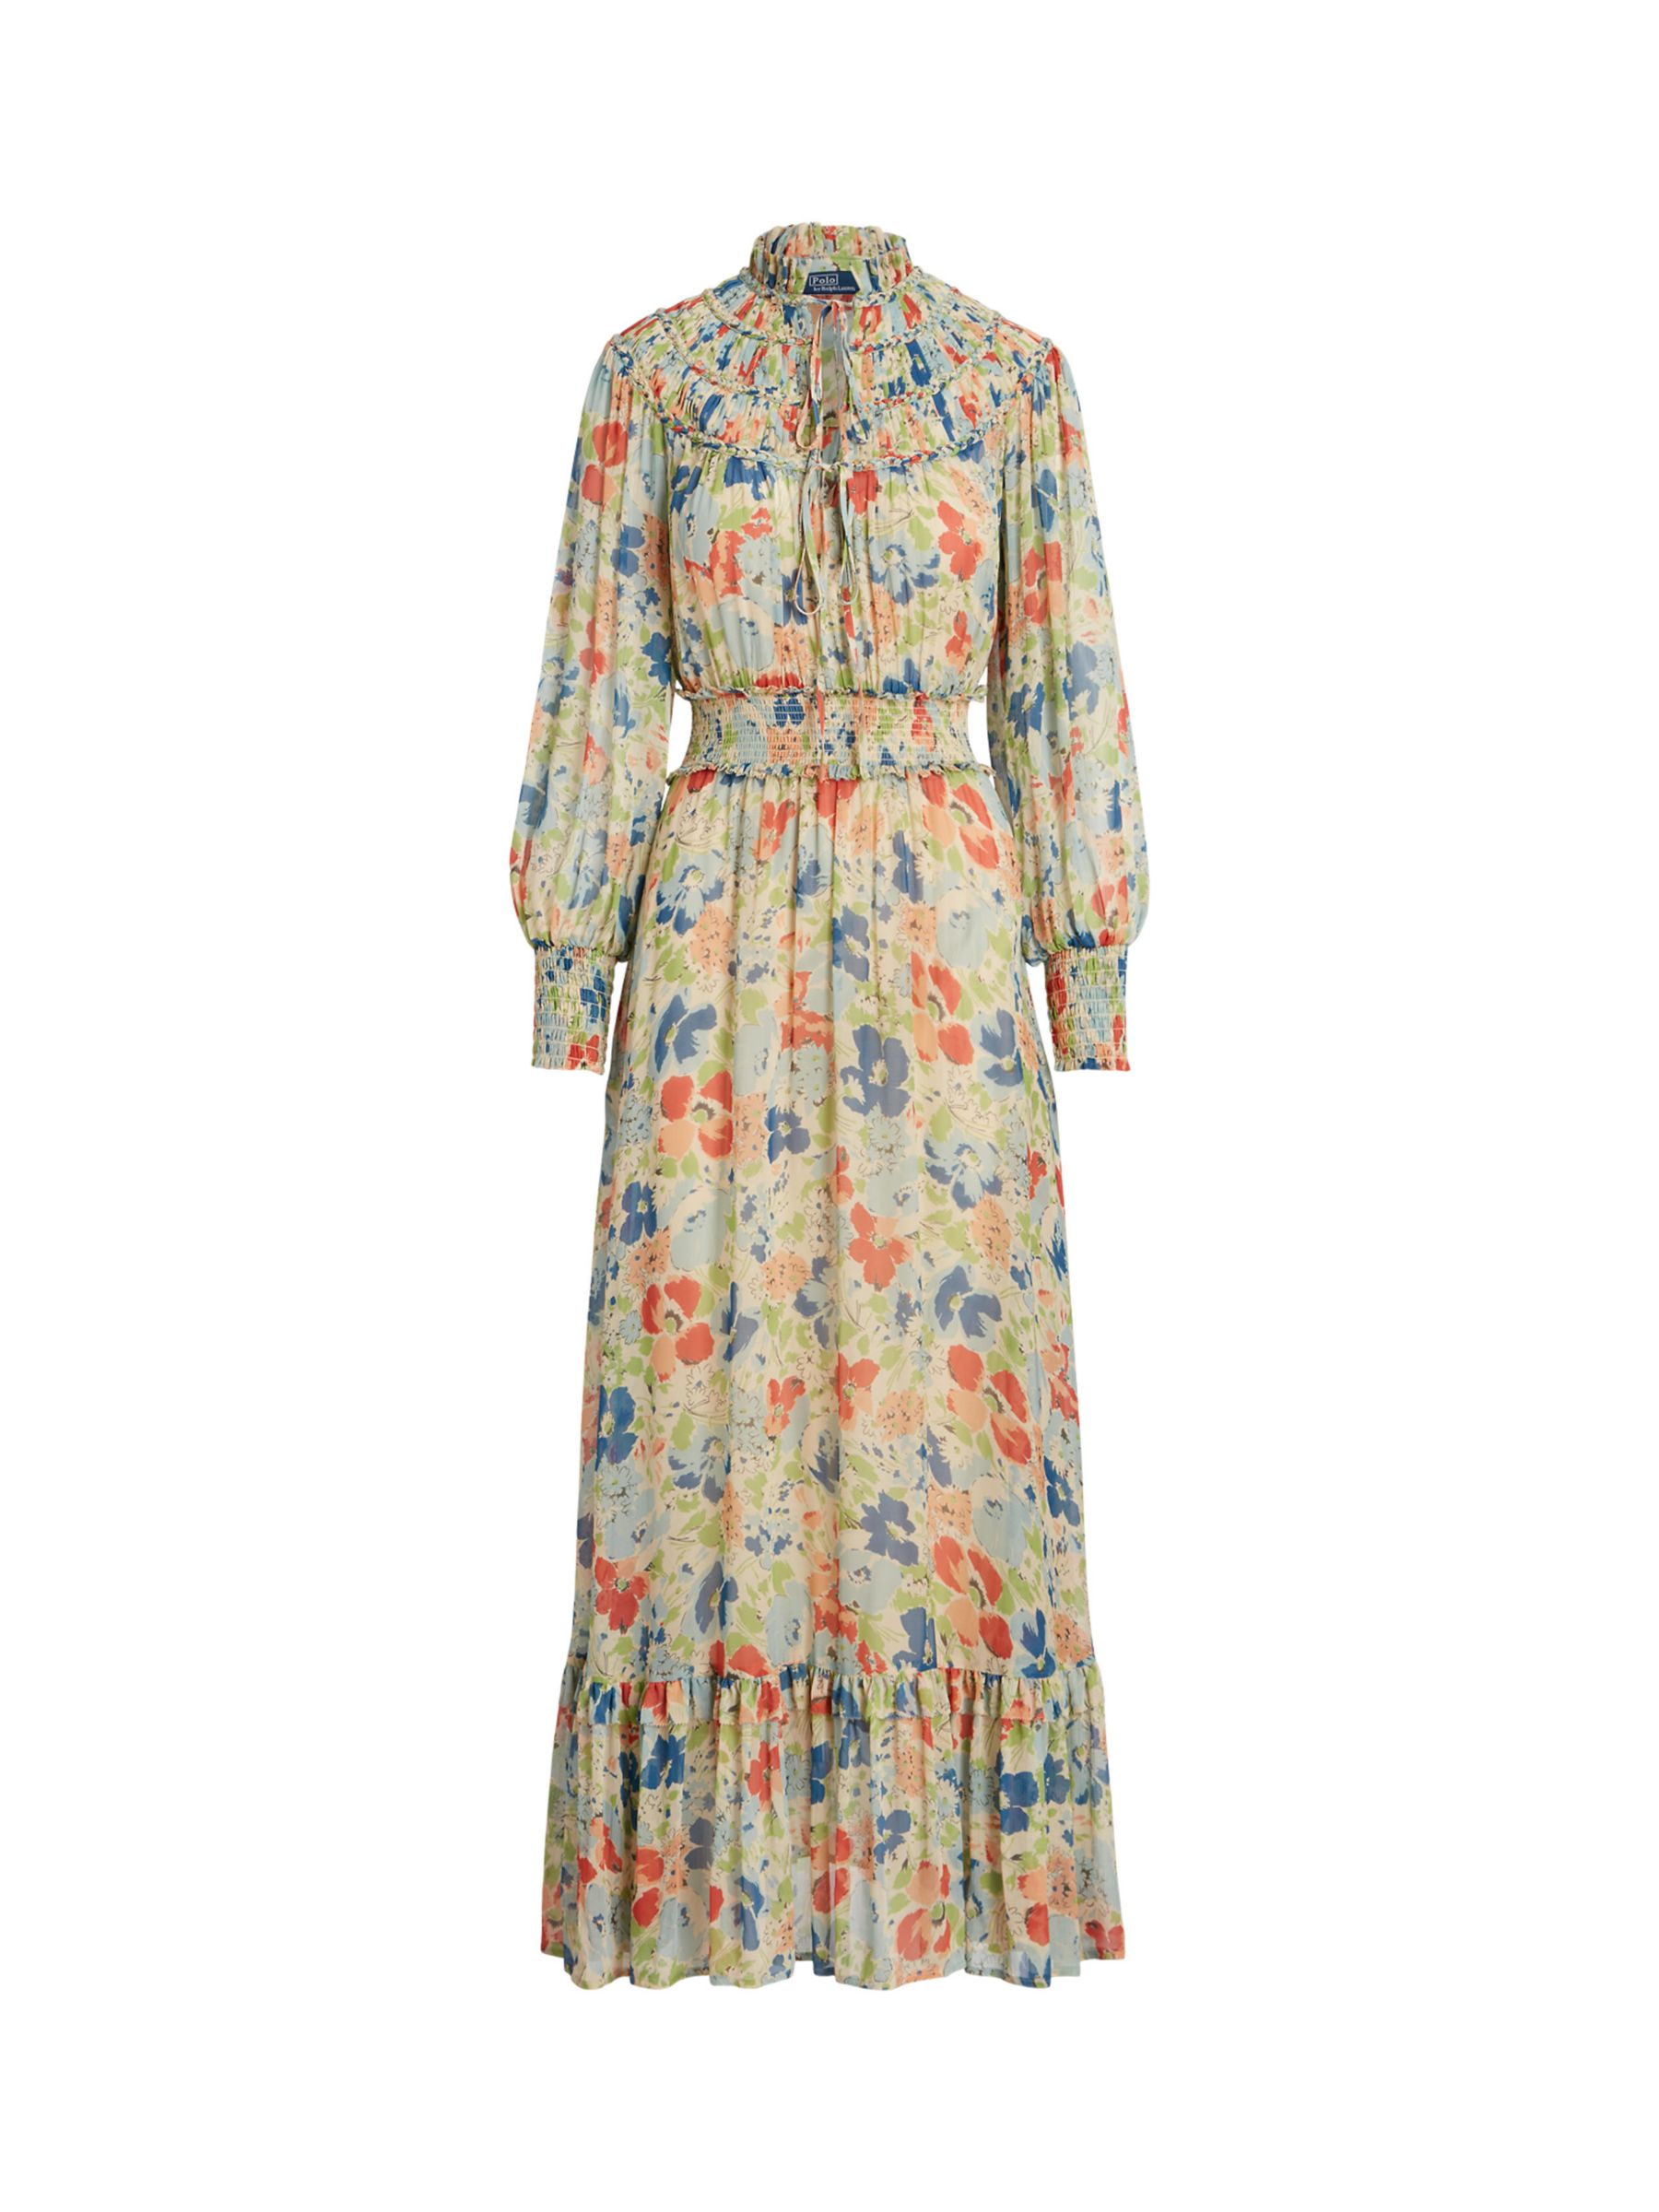 Polo Ralph Lauren Floral Print Blouson Maxi Dress, Multi, 16